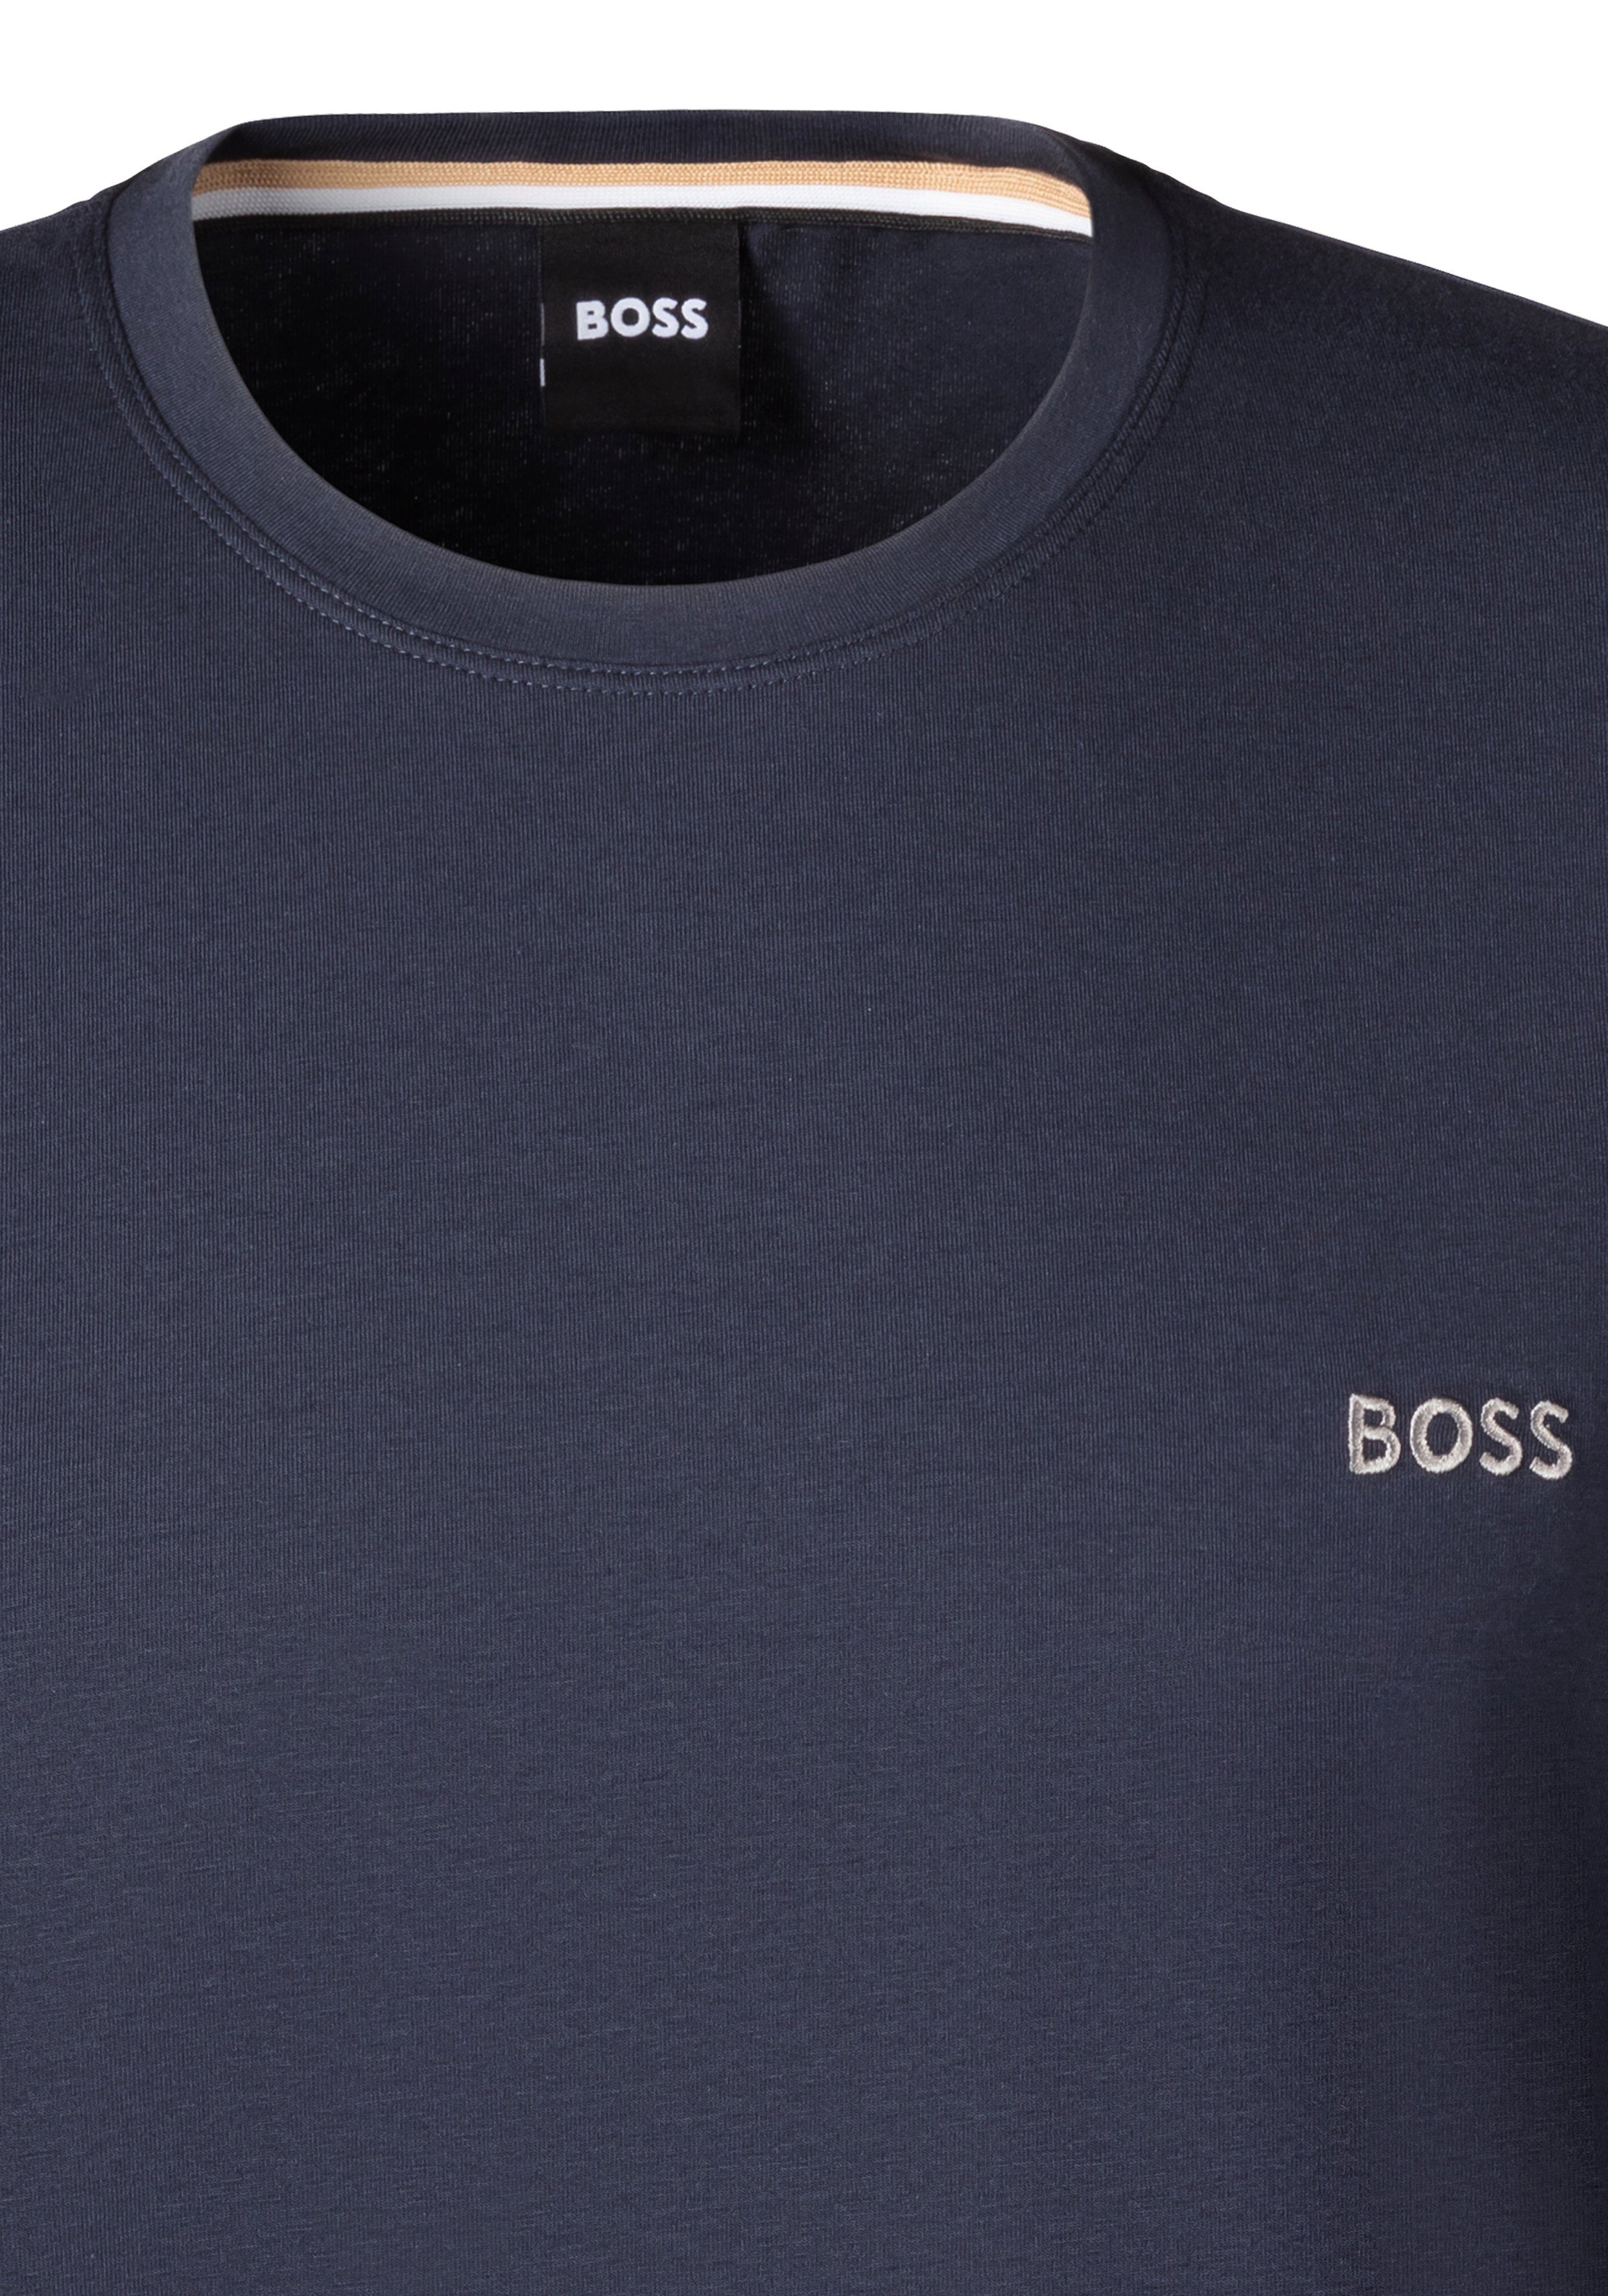 BOSS T-Shirt mit Brustlogo navy